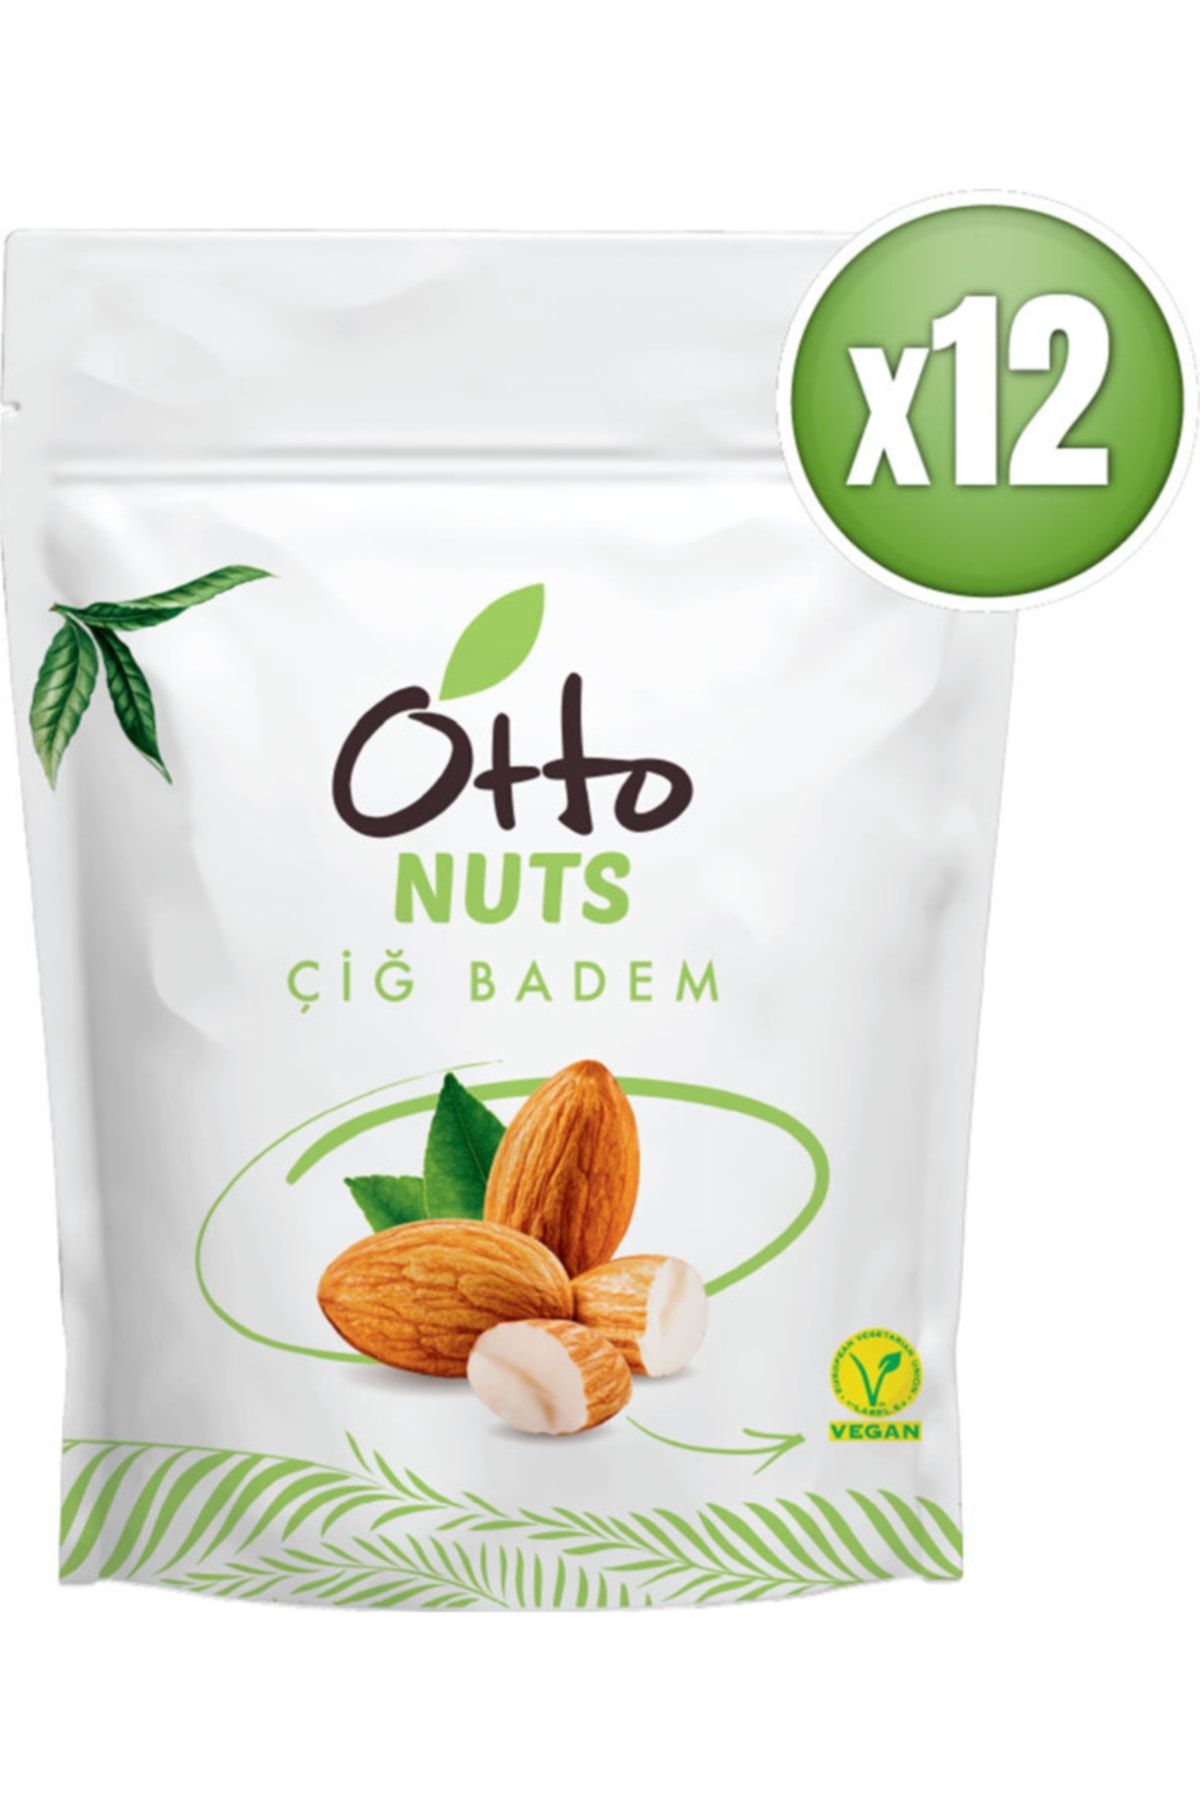 Otto Nuts Vegan Çiğ Badem 12 X 150 g